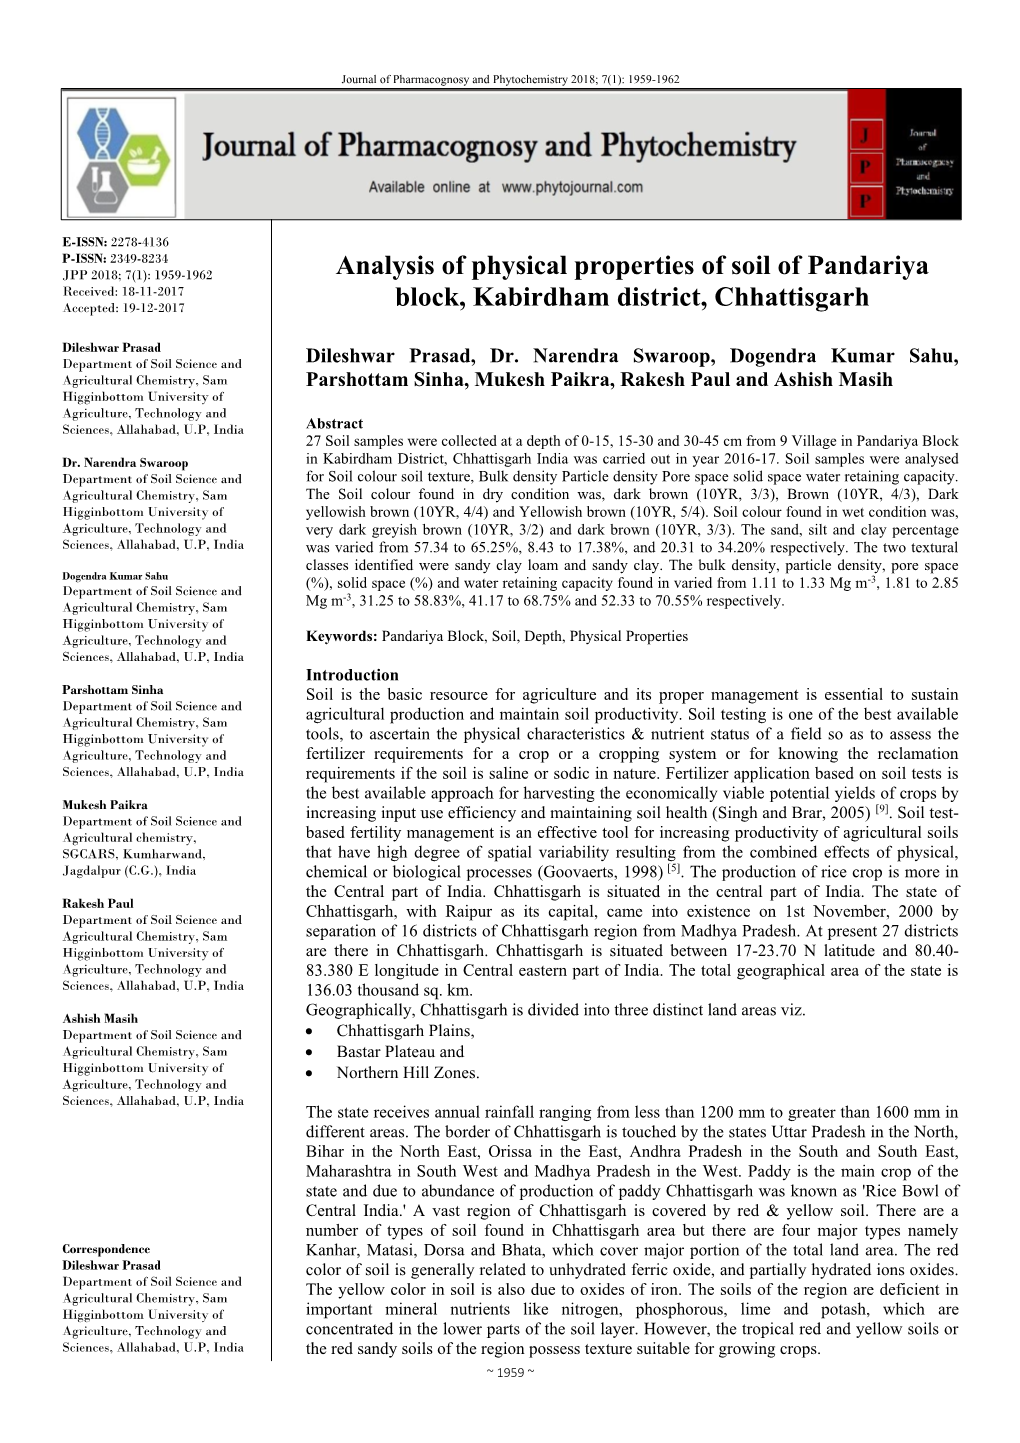 Analysis of Physical Properties of Soil of Pandariya Block, Kabirdham